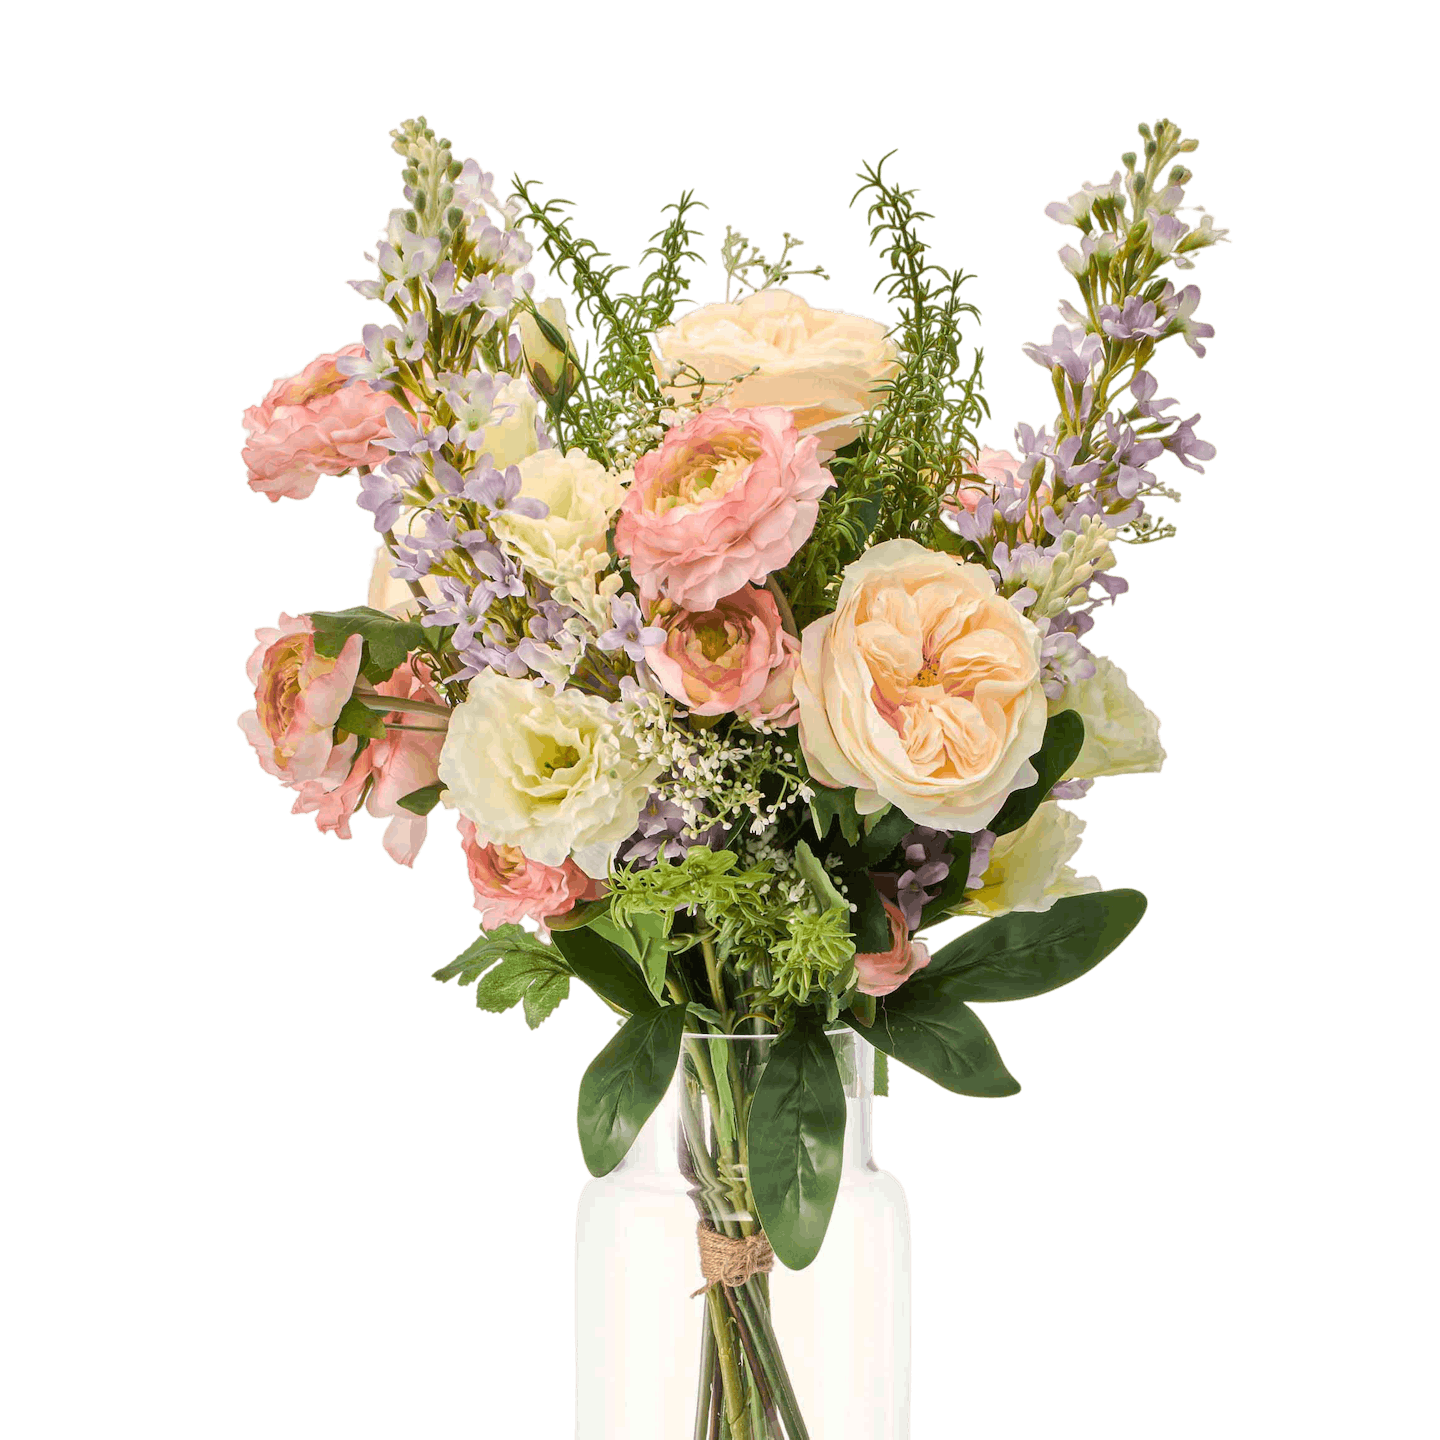 Artificial pretty pastels bouquet in a glass vase